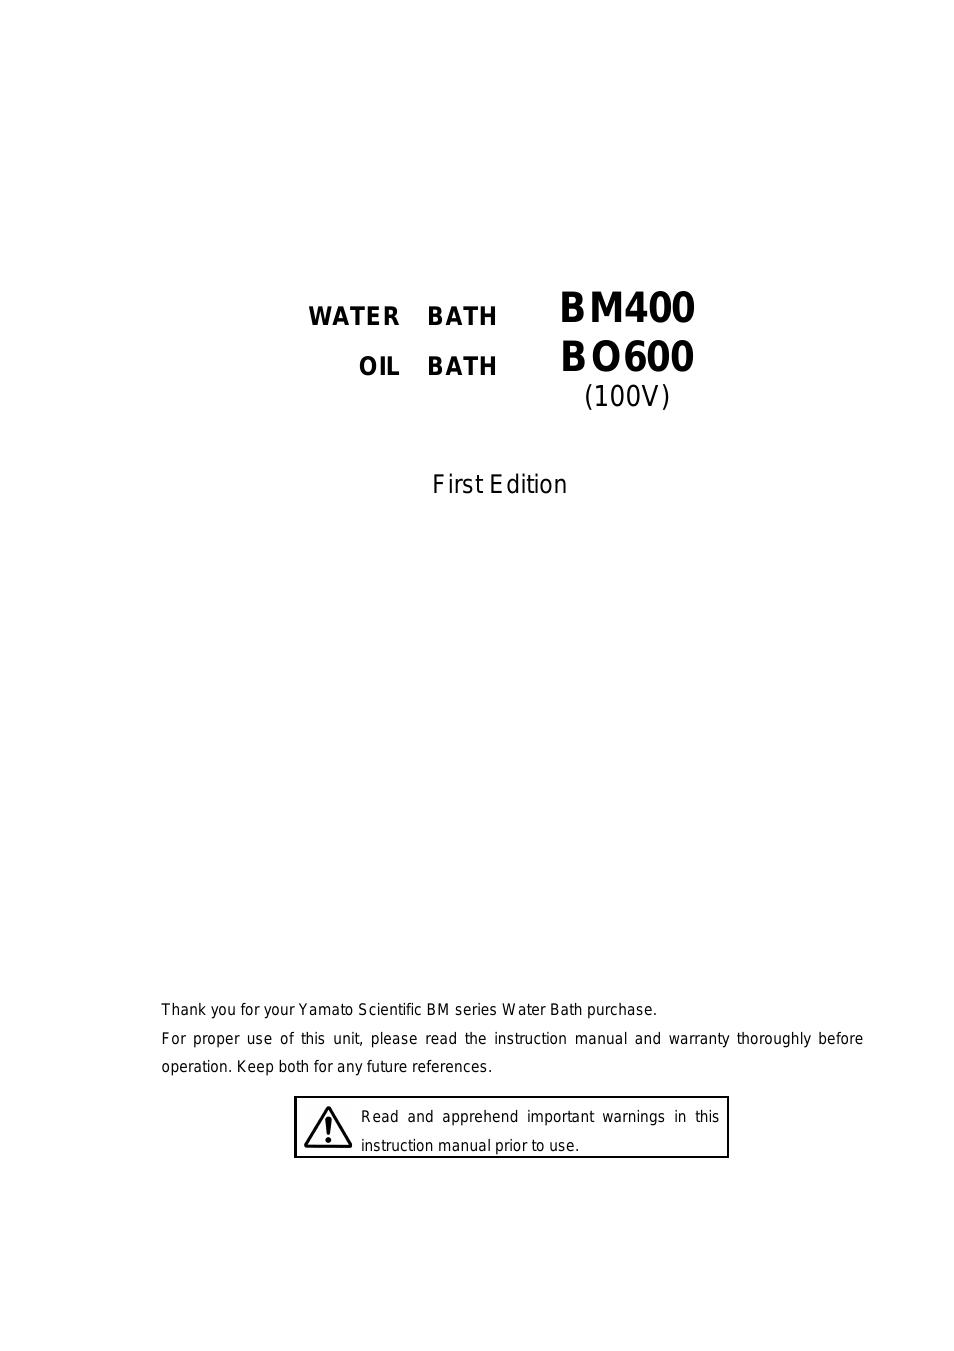 BO600 Water Baths/Oil Baths